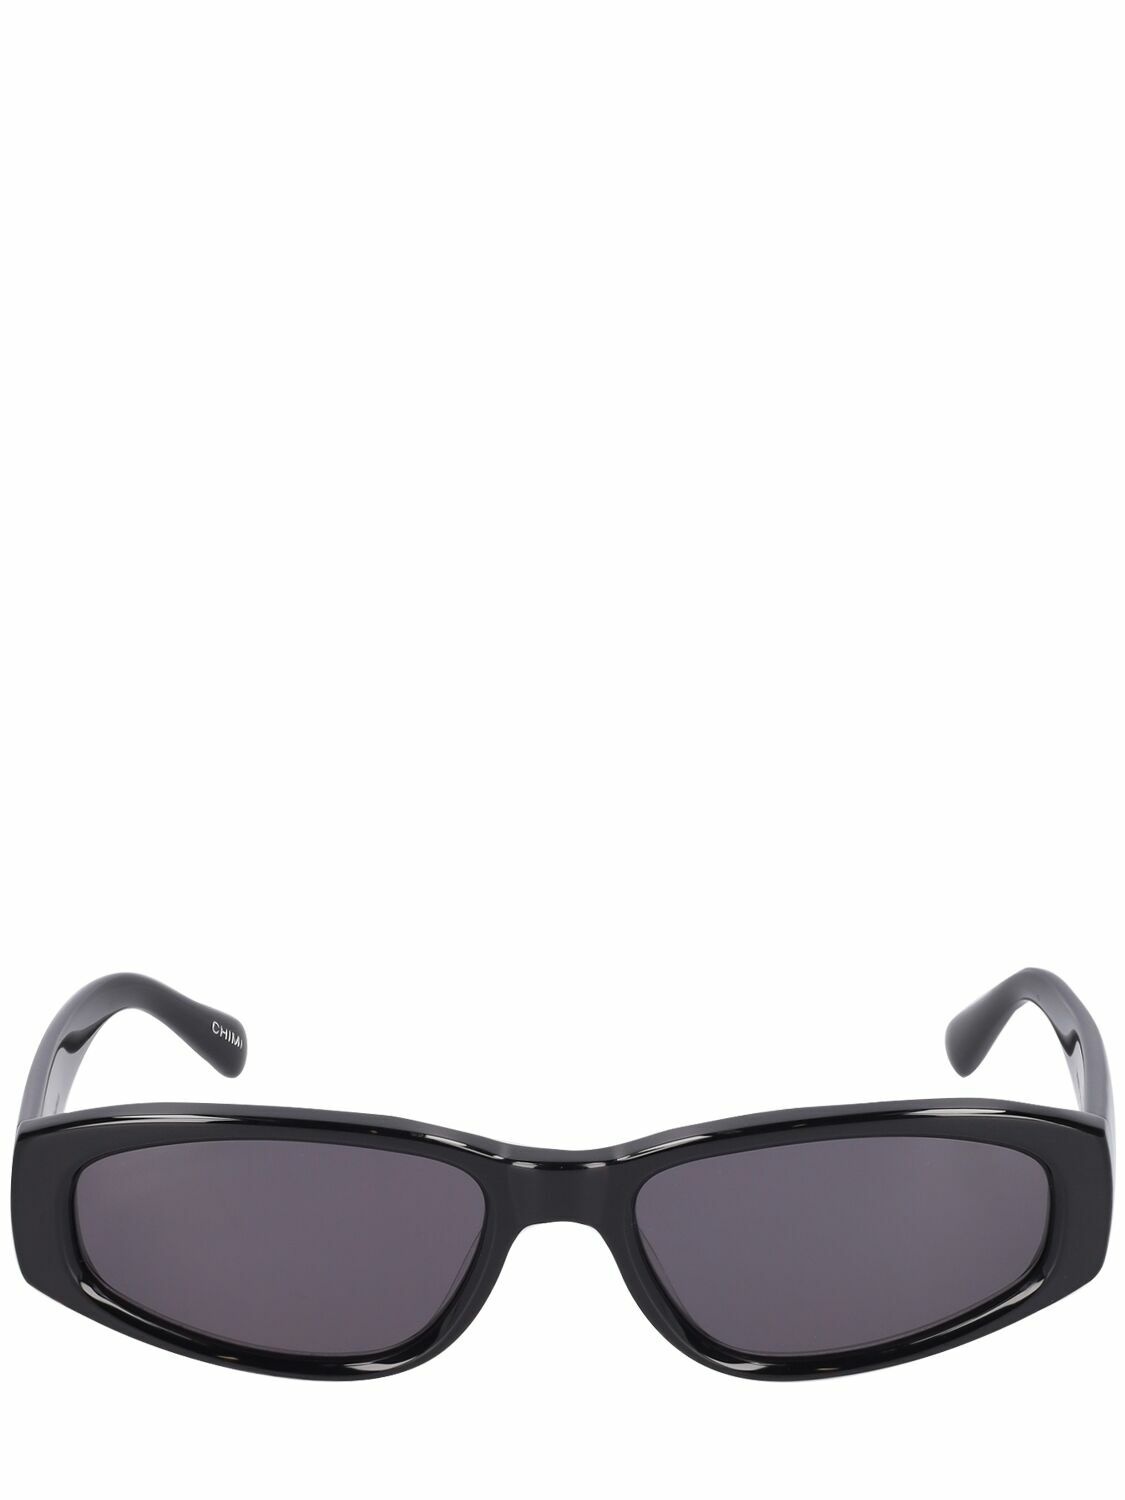 Photo: CHIMI - 09.2 Squared Acetate Sunglasses